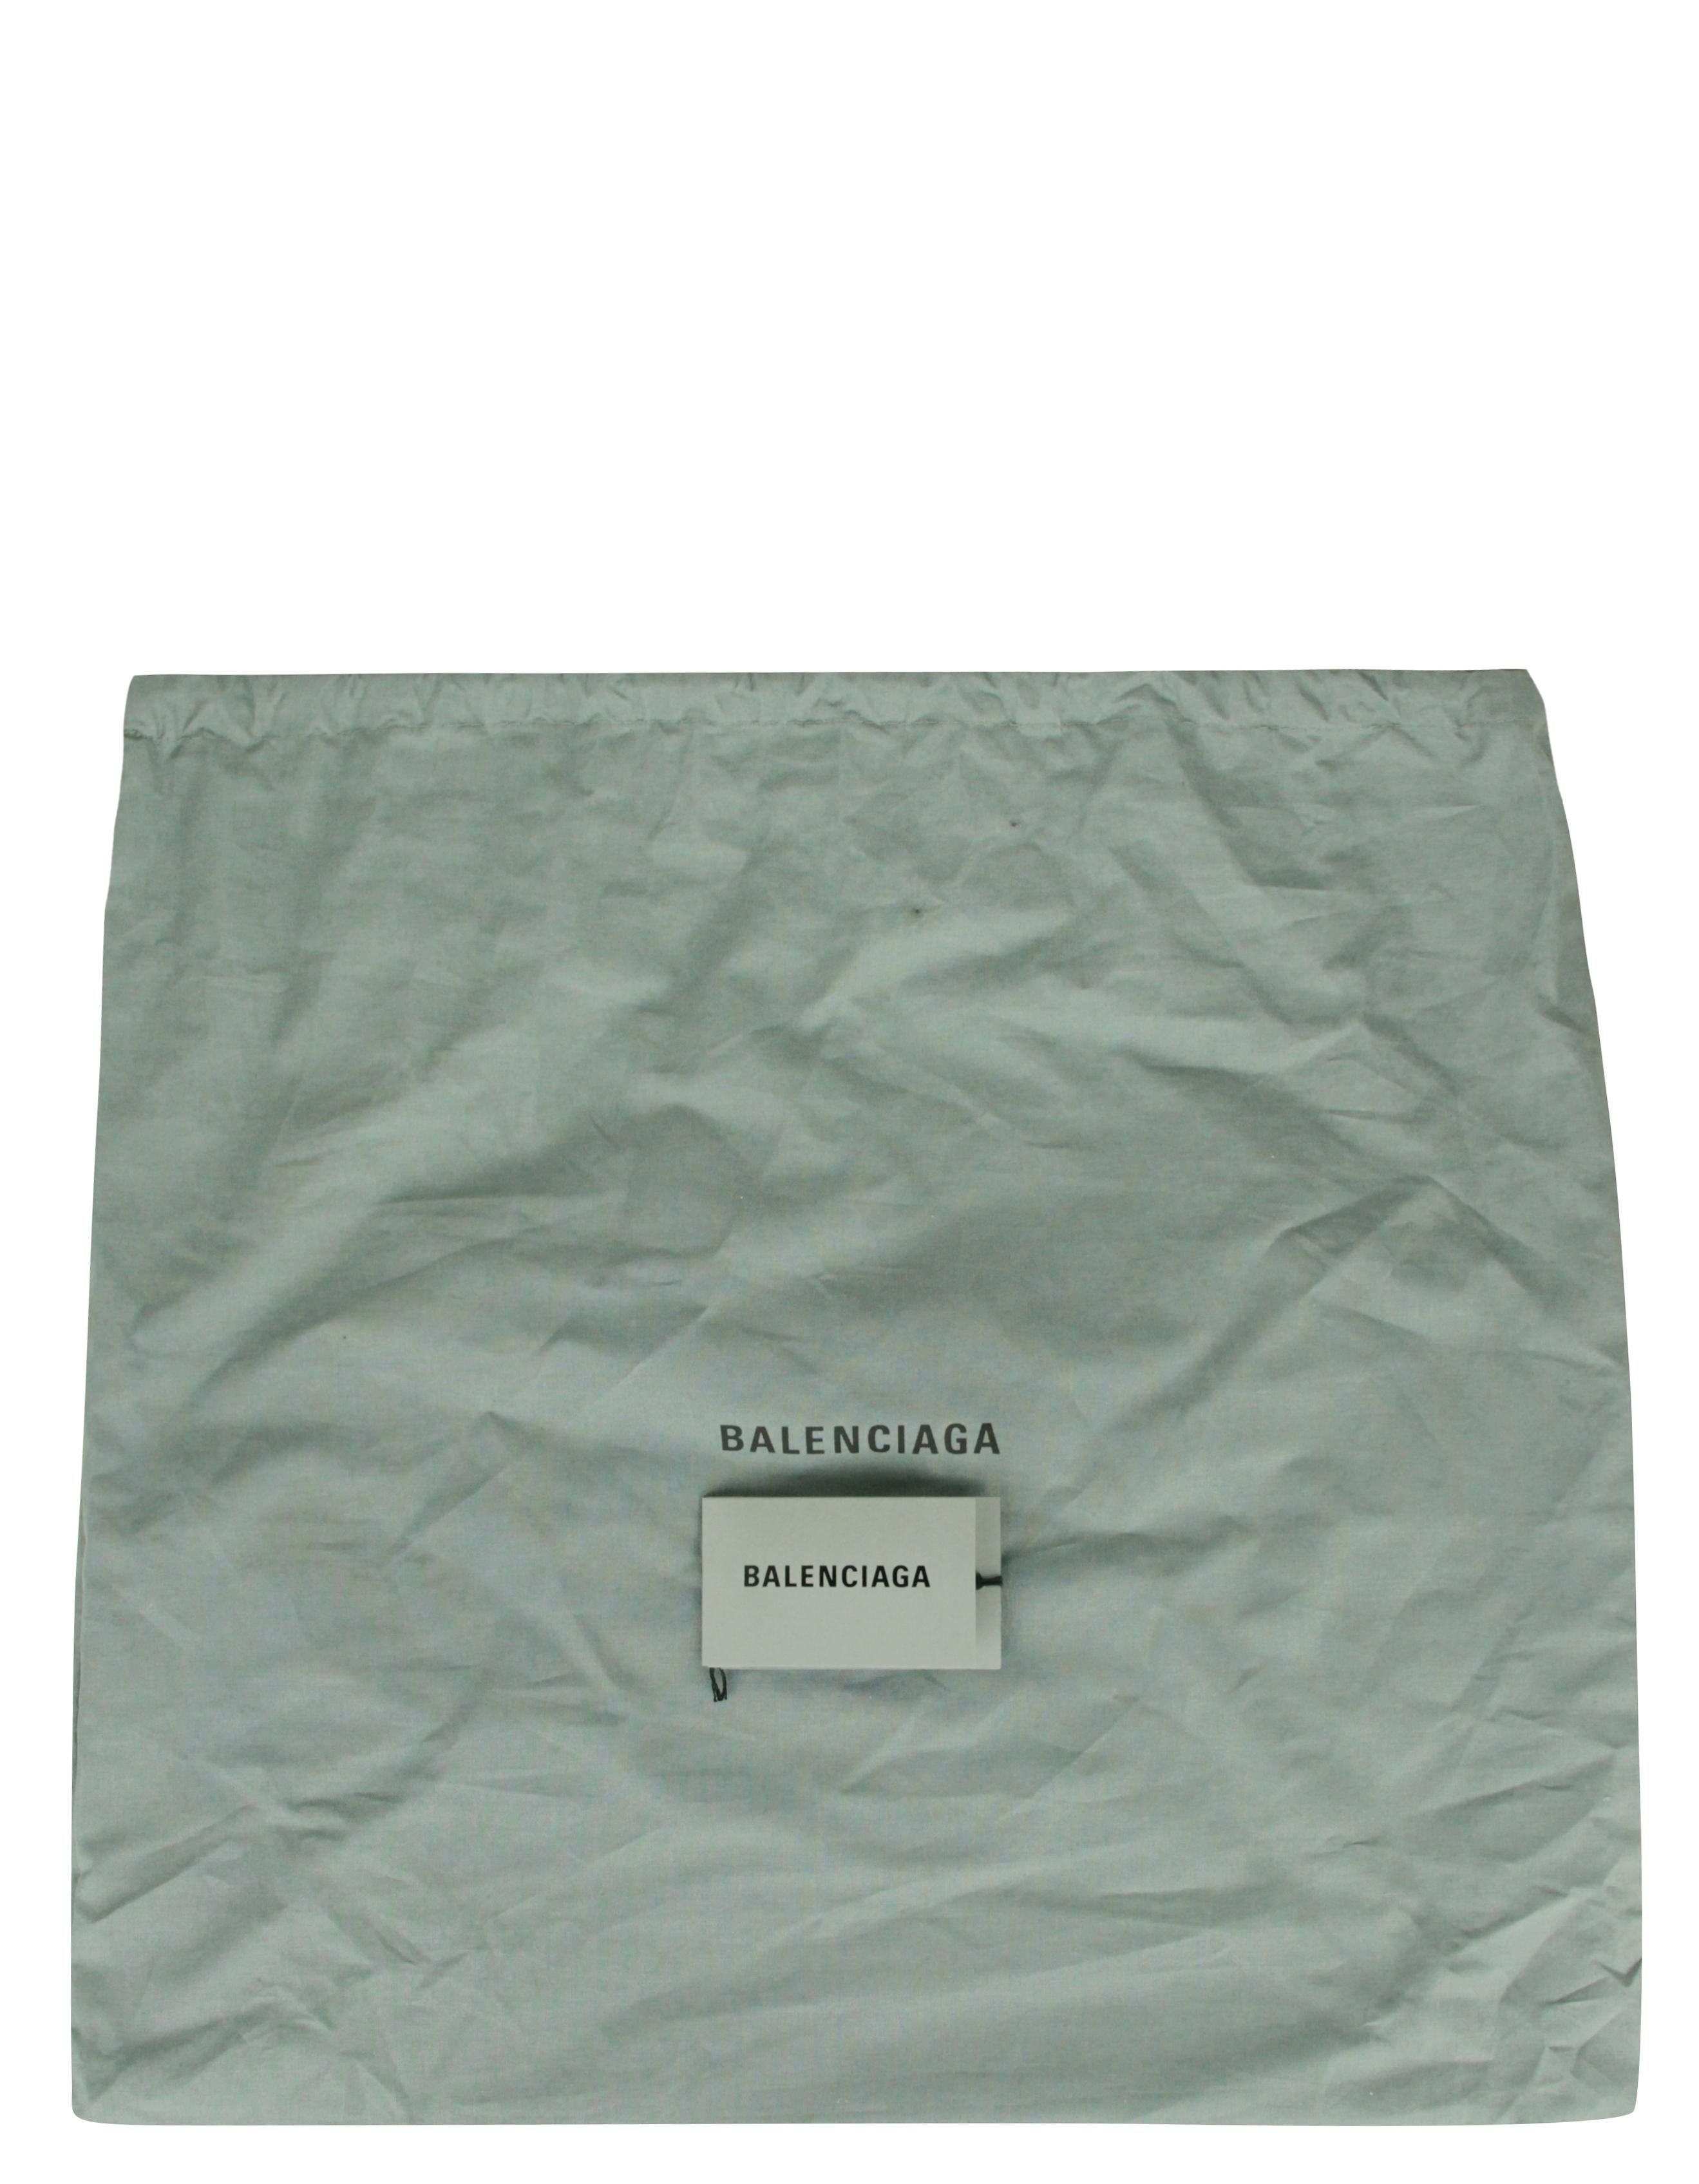 Balenciaga Black Grained Calfskin Leather Neo Classic Hardware S City Bag For Sale 5